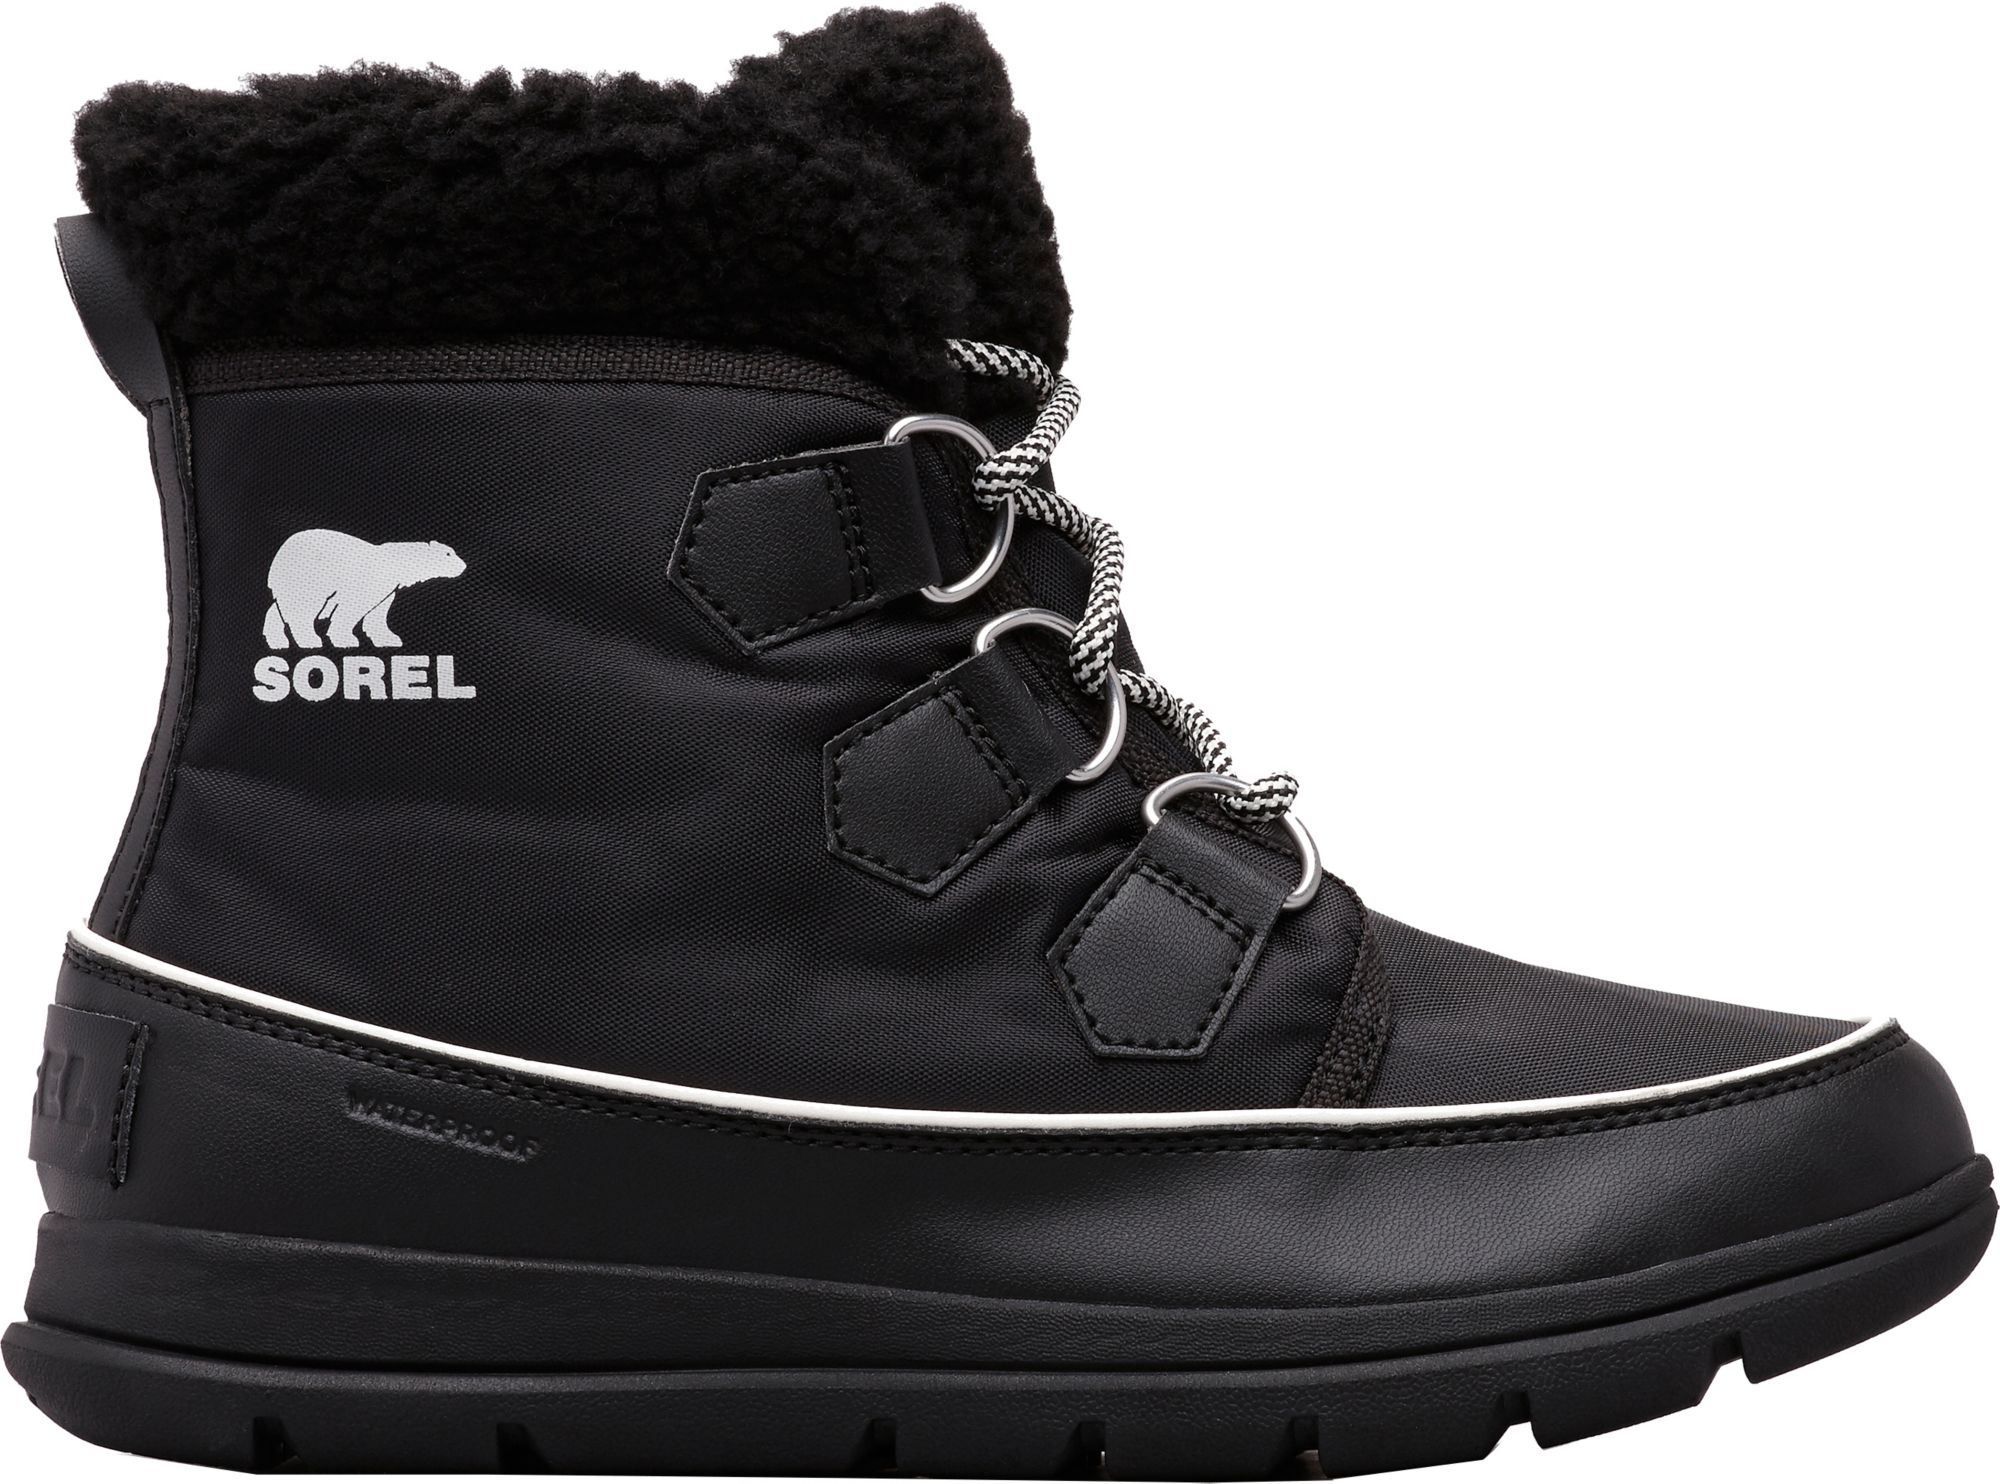 sorel cozy explorer winter boots